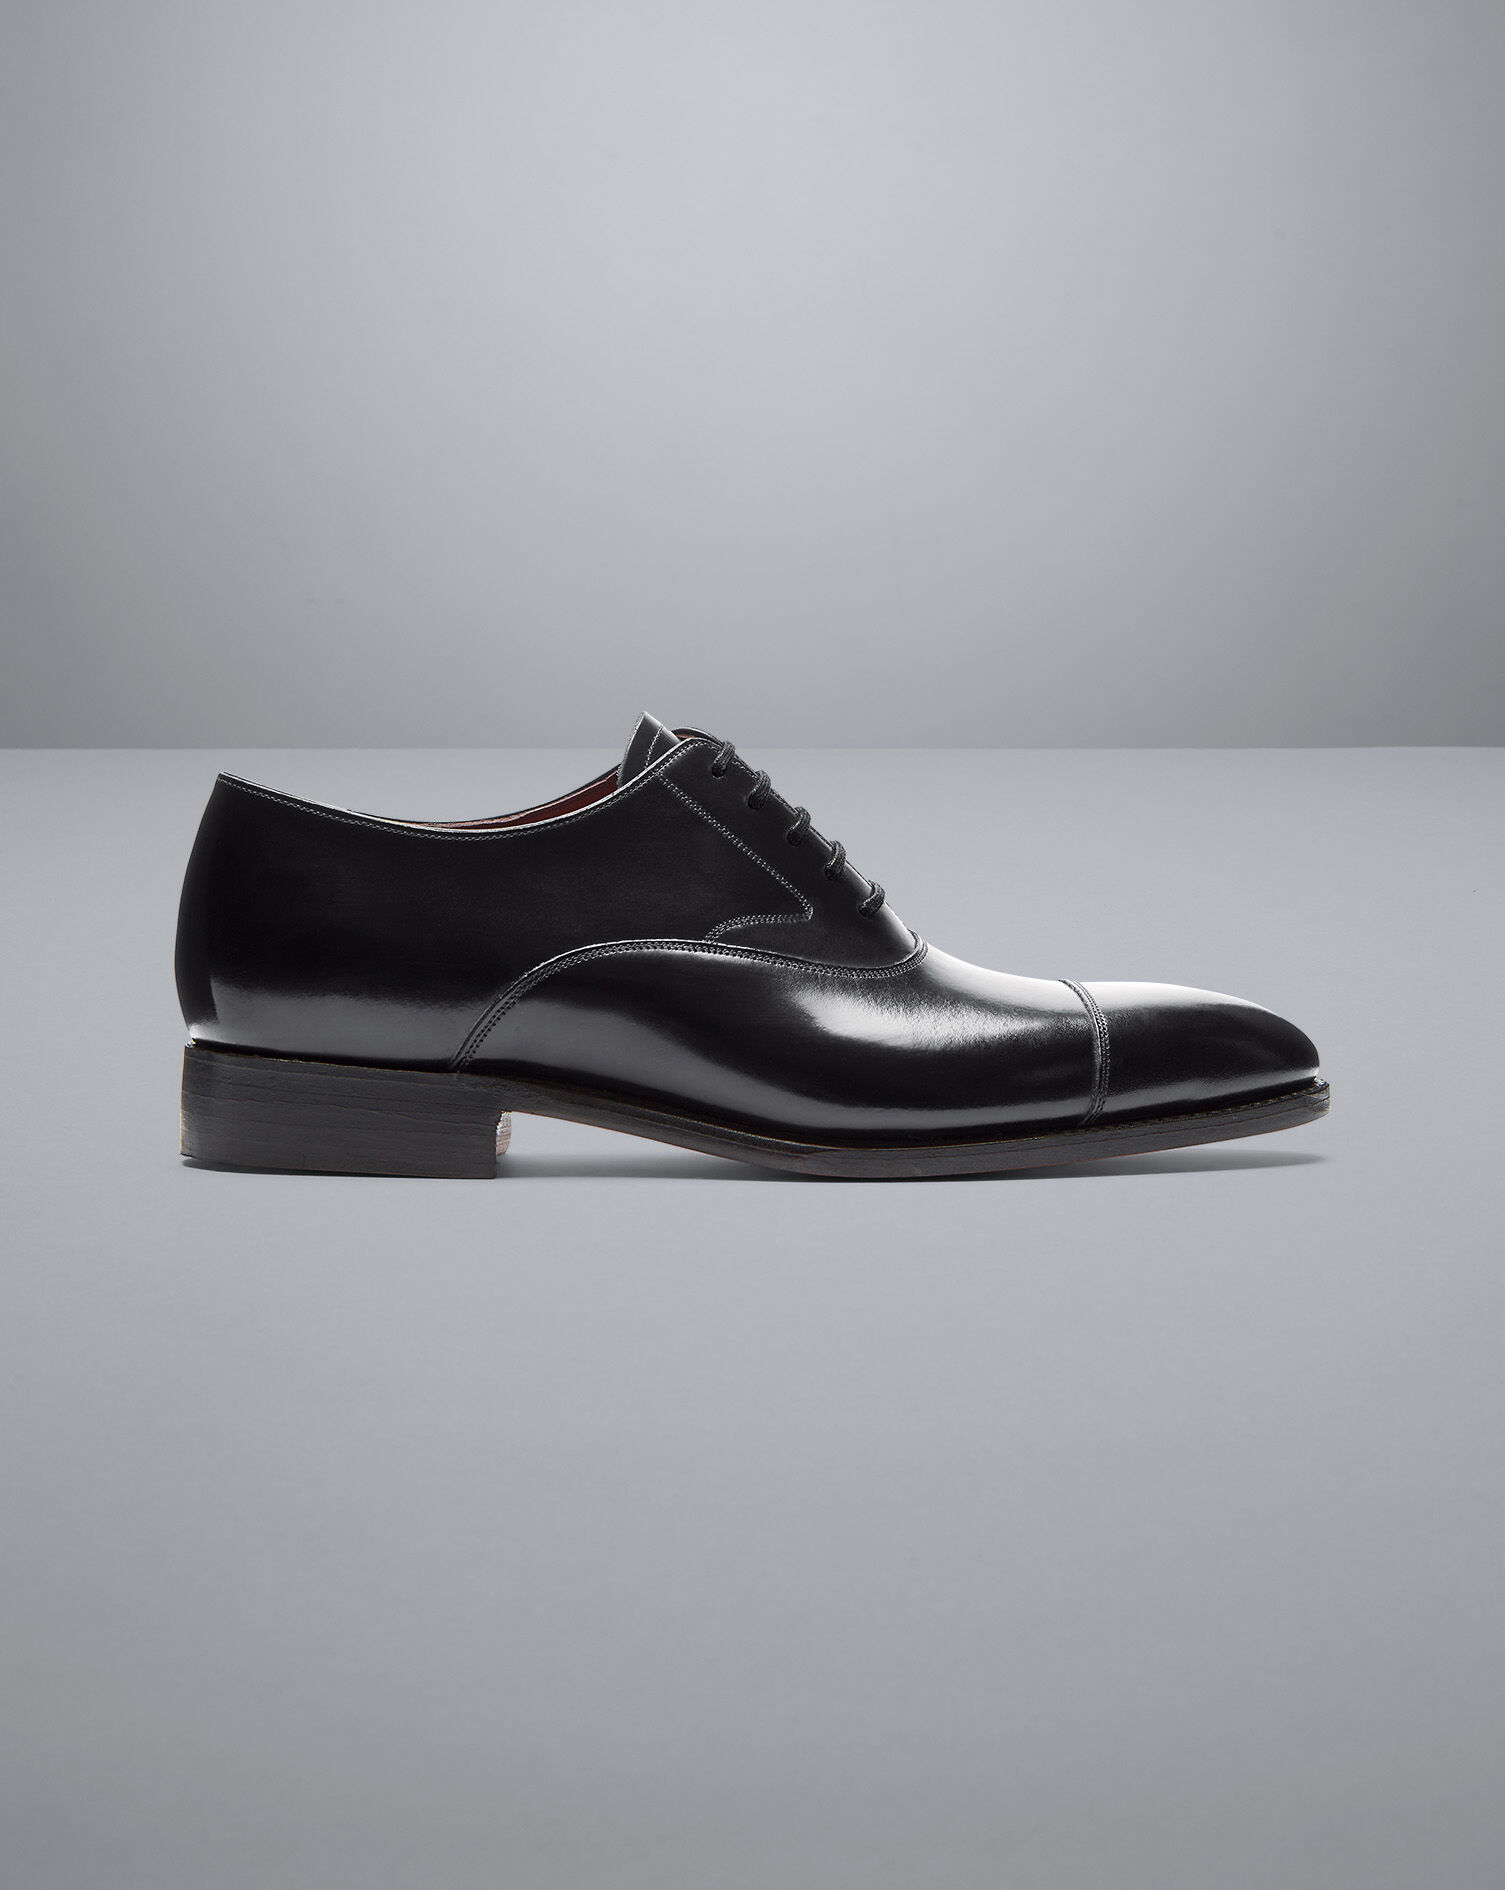 Shiny Black Patent Evening Oxford Tie Shoes Size 6 7 8 9 10 11 12 MENS SMART 